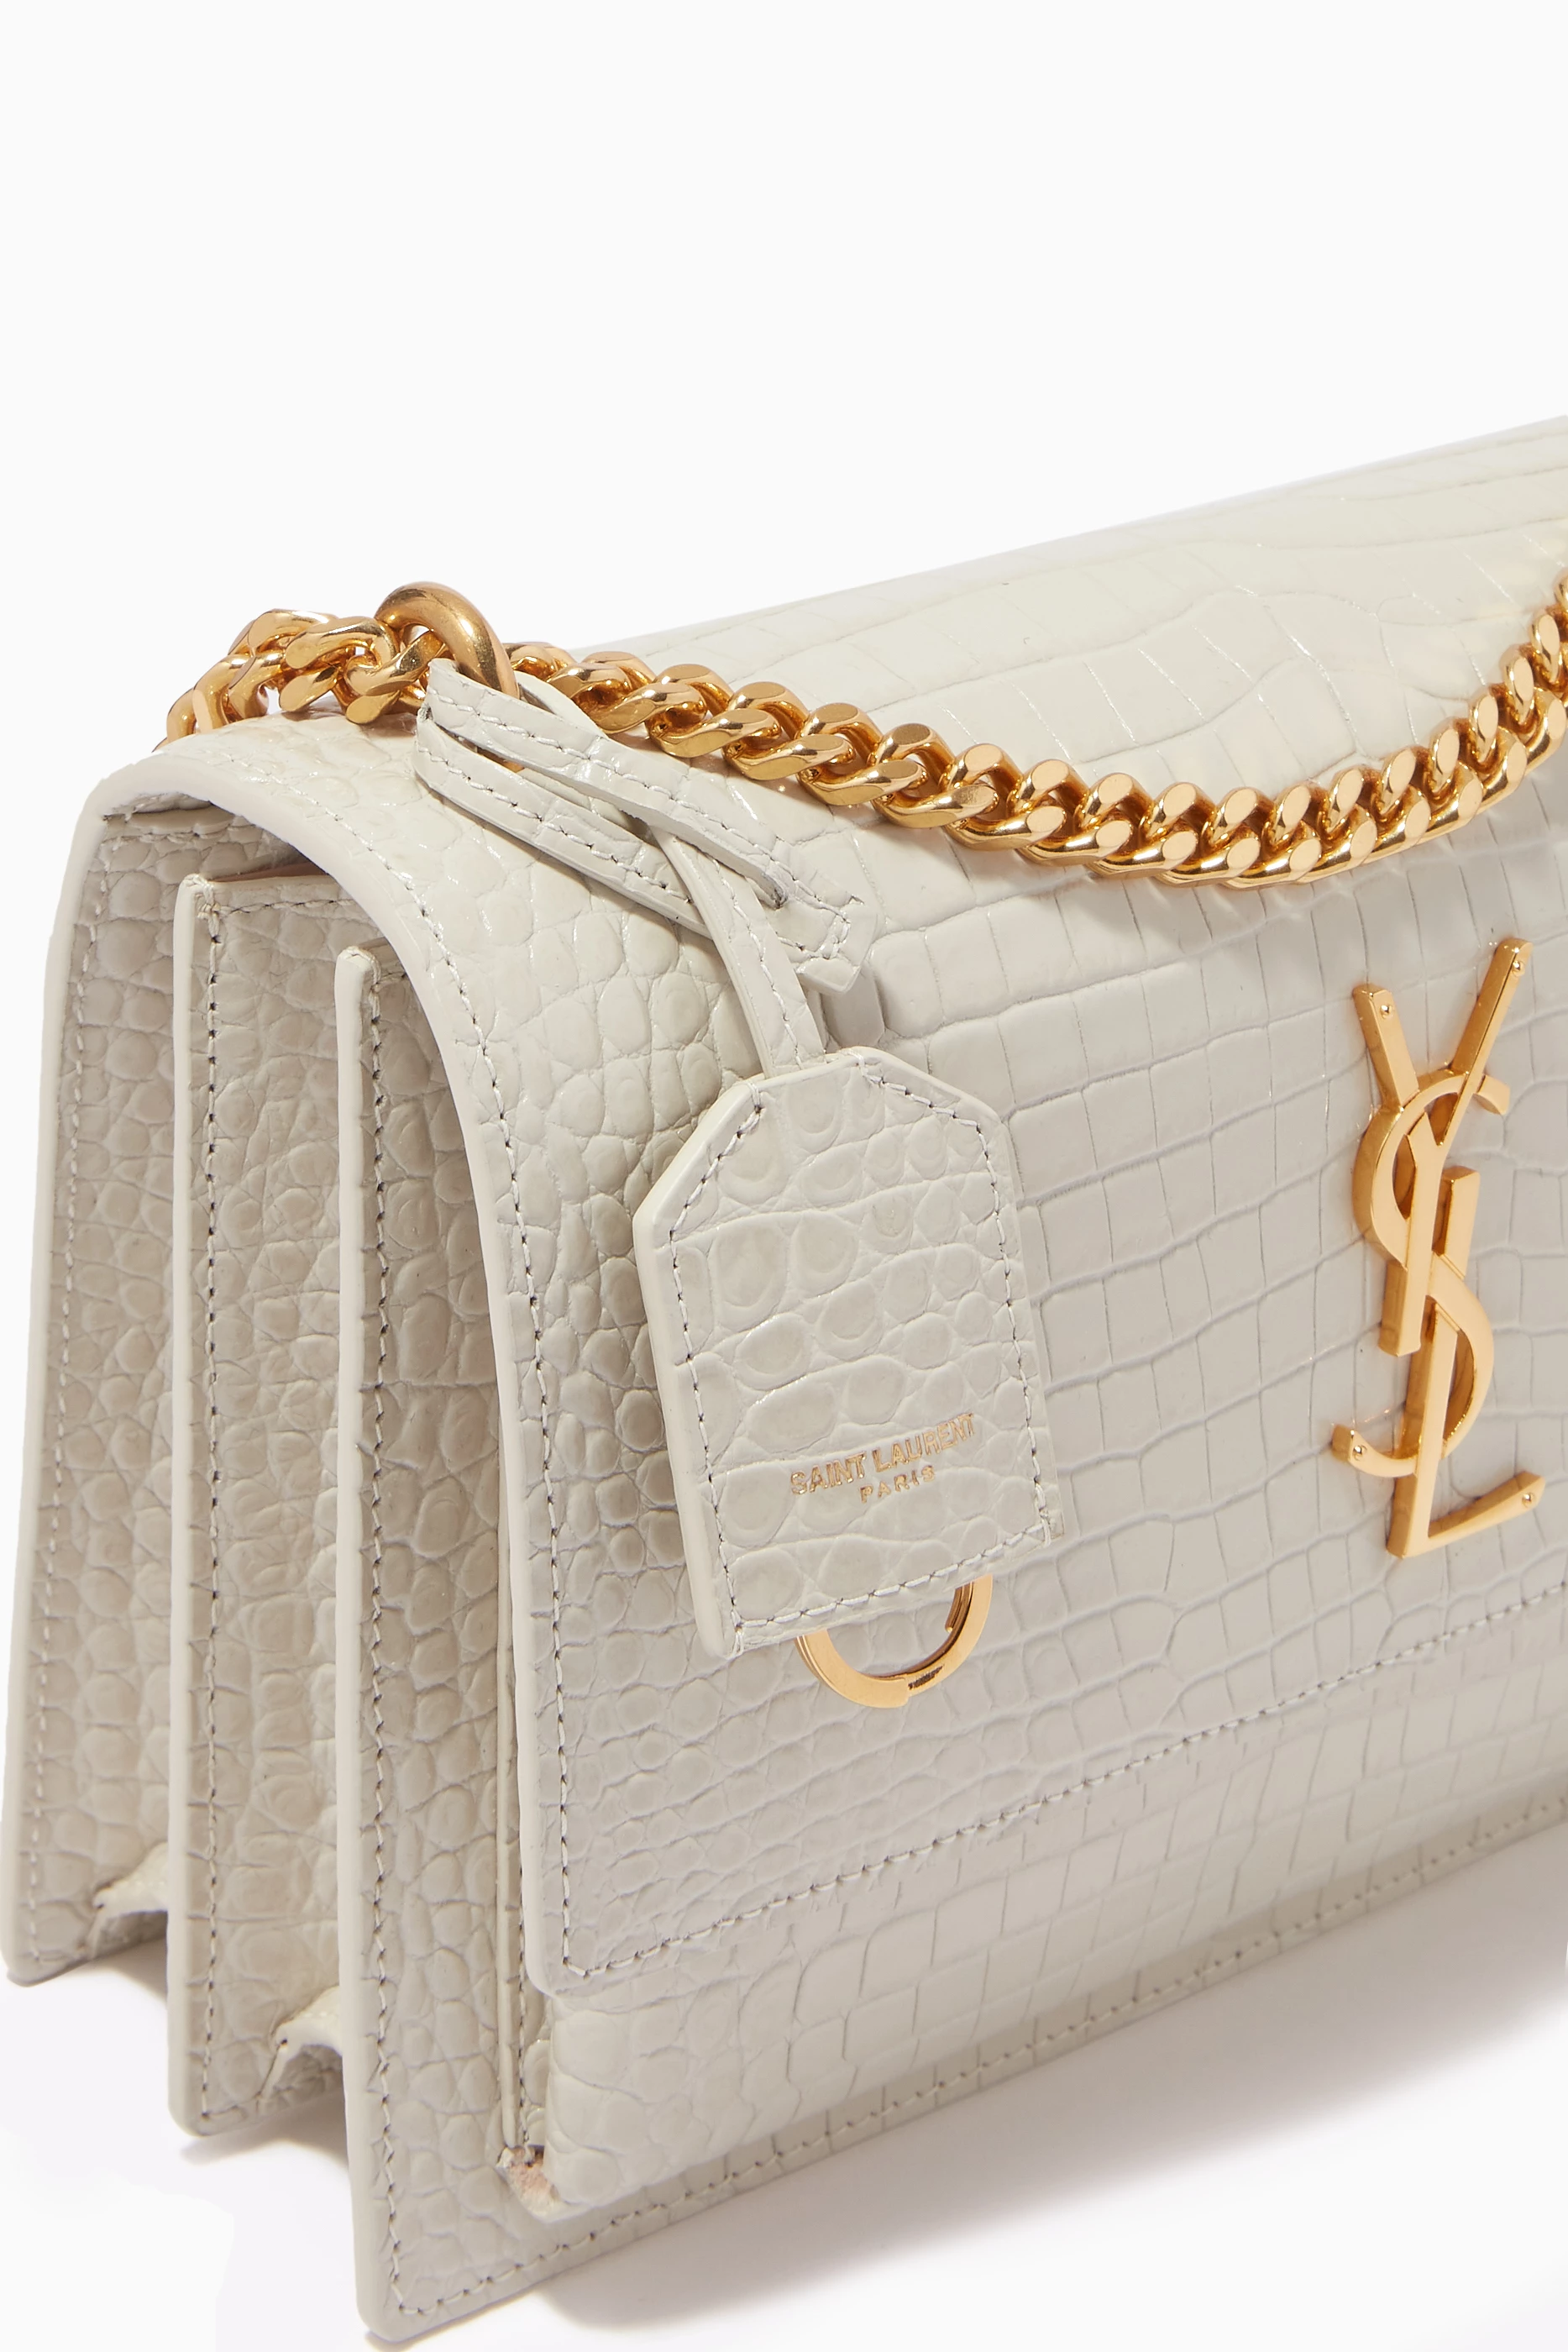 Sunset Medium Chain Bag In Crocodile-Embossed Shiny Leather Blanc Vintage